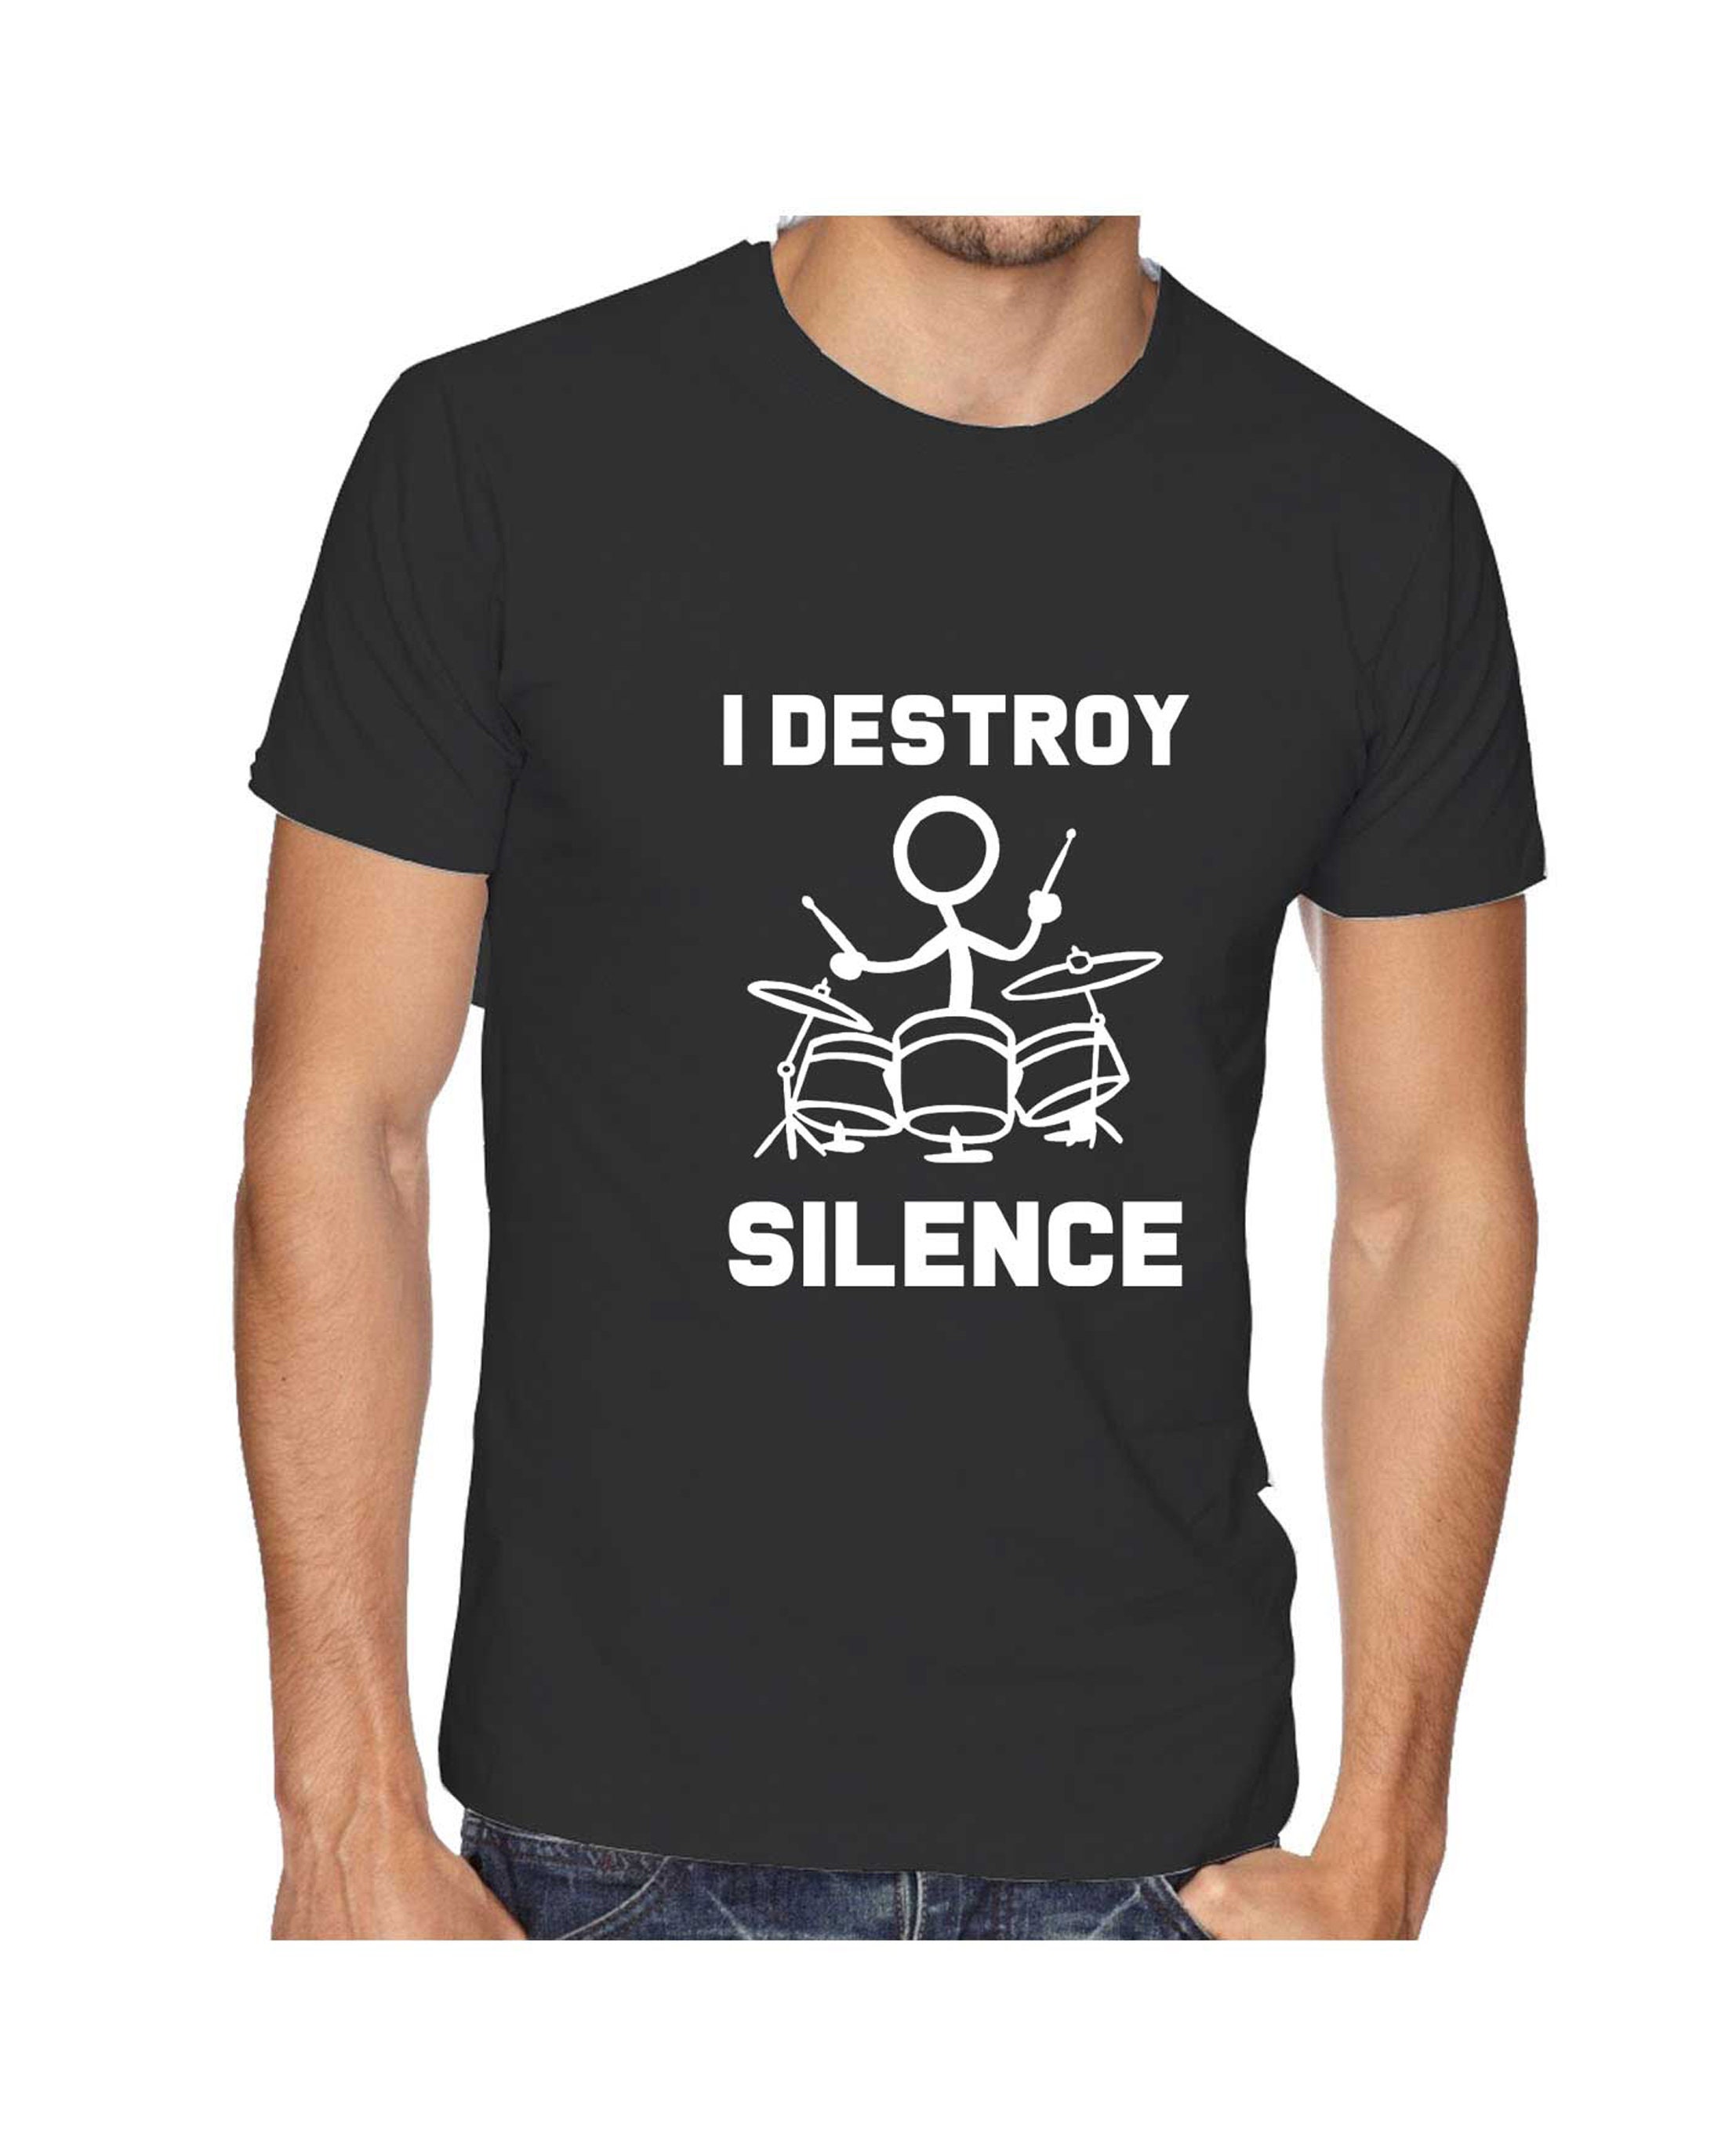 I Destroy Silence Tshirt T shirt T-shirt Tee Shirt Gift for | Etsy